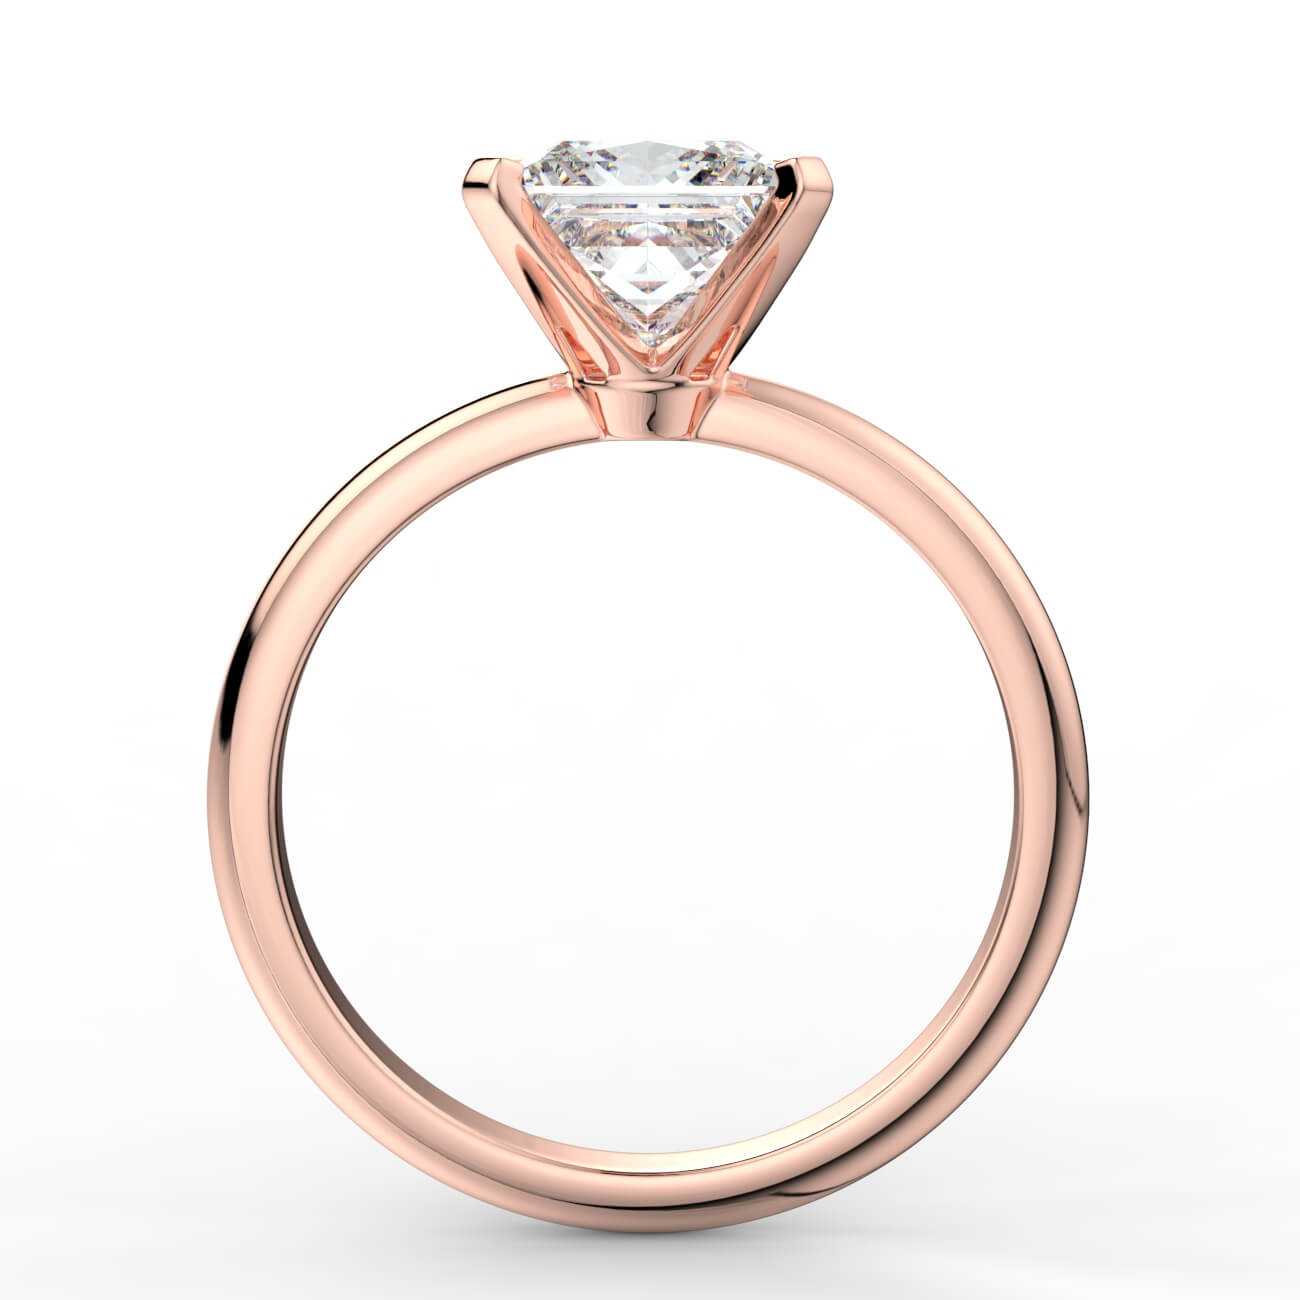 Knife-edge solitaire princess cut diamond engagement ring in rose gold – Australian Diamond Network